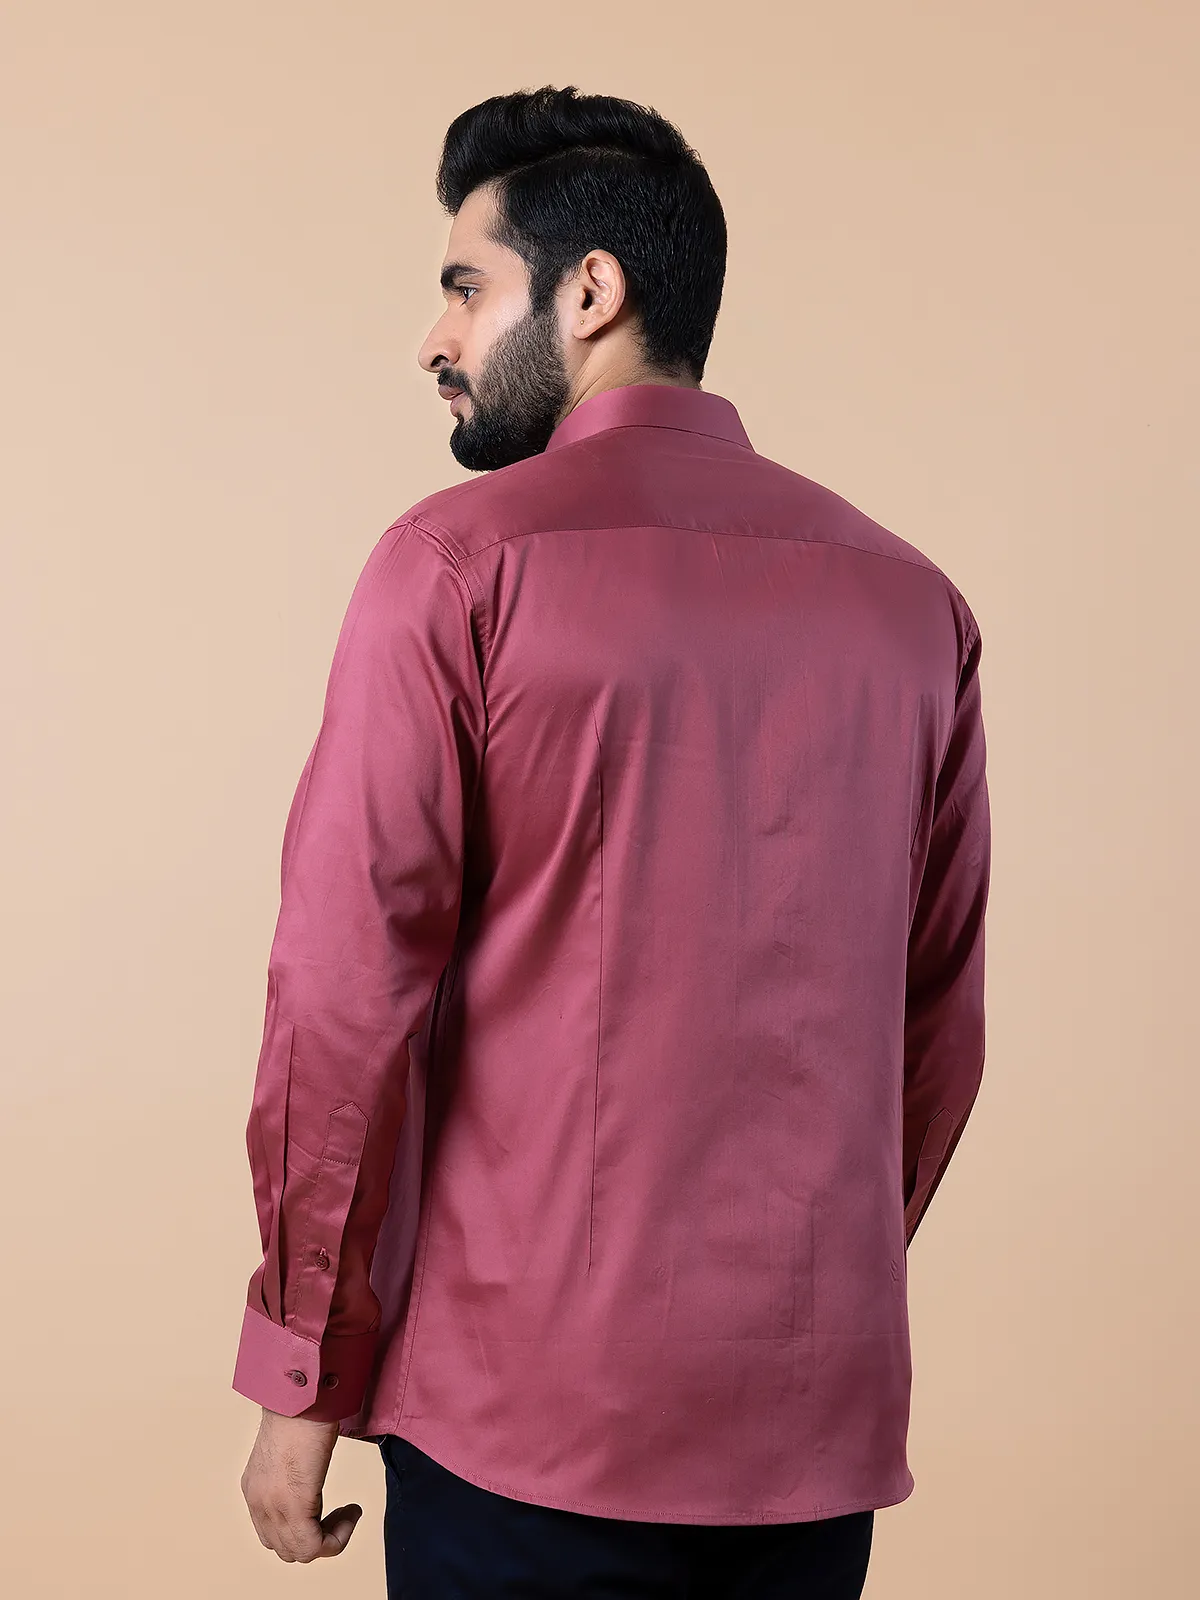 Avega coral pink cotton full sleeves shirt